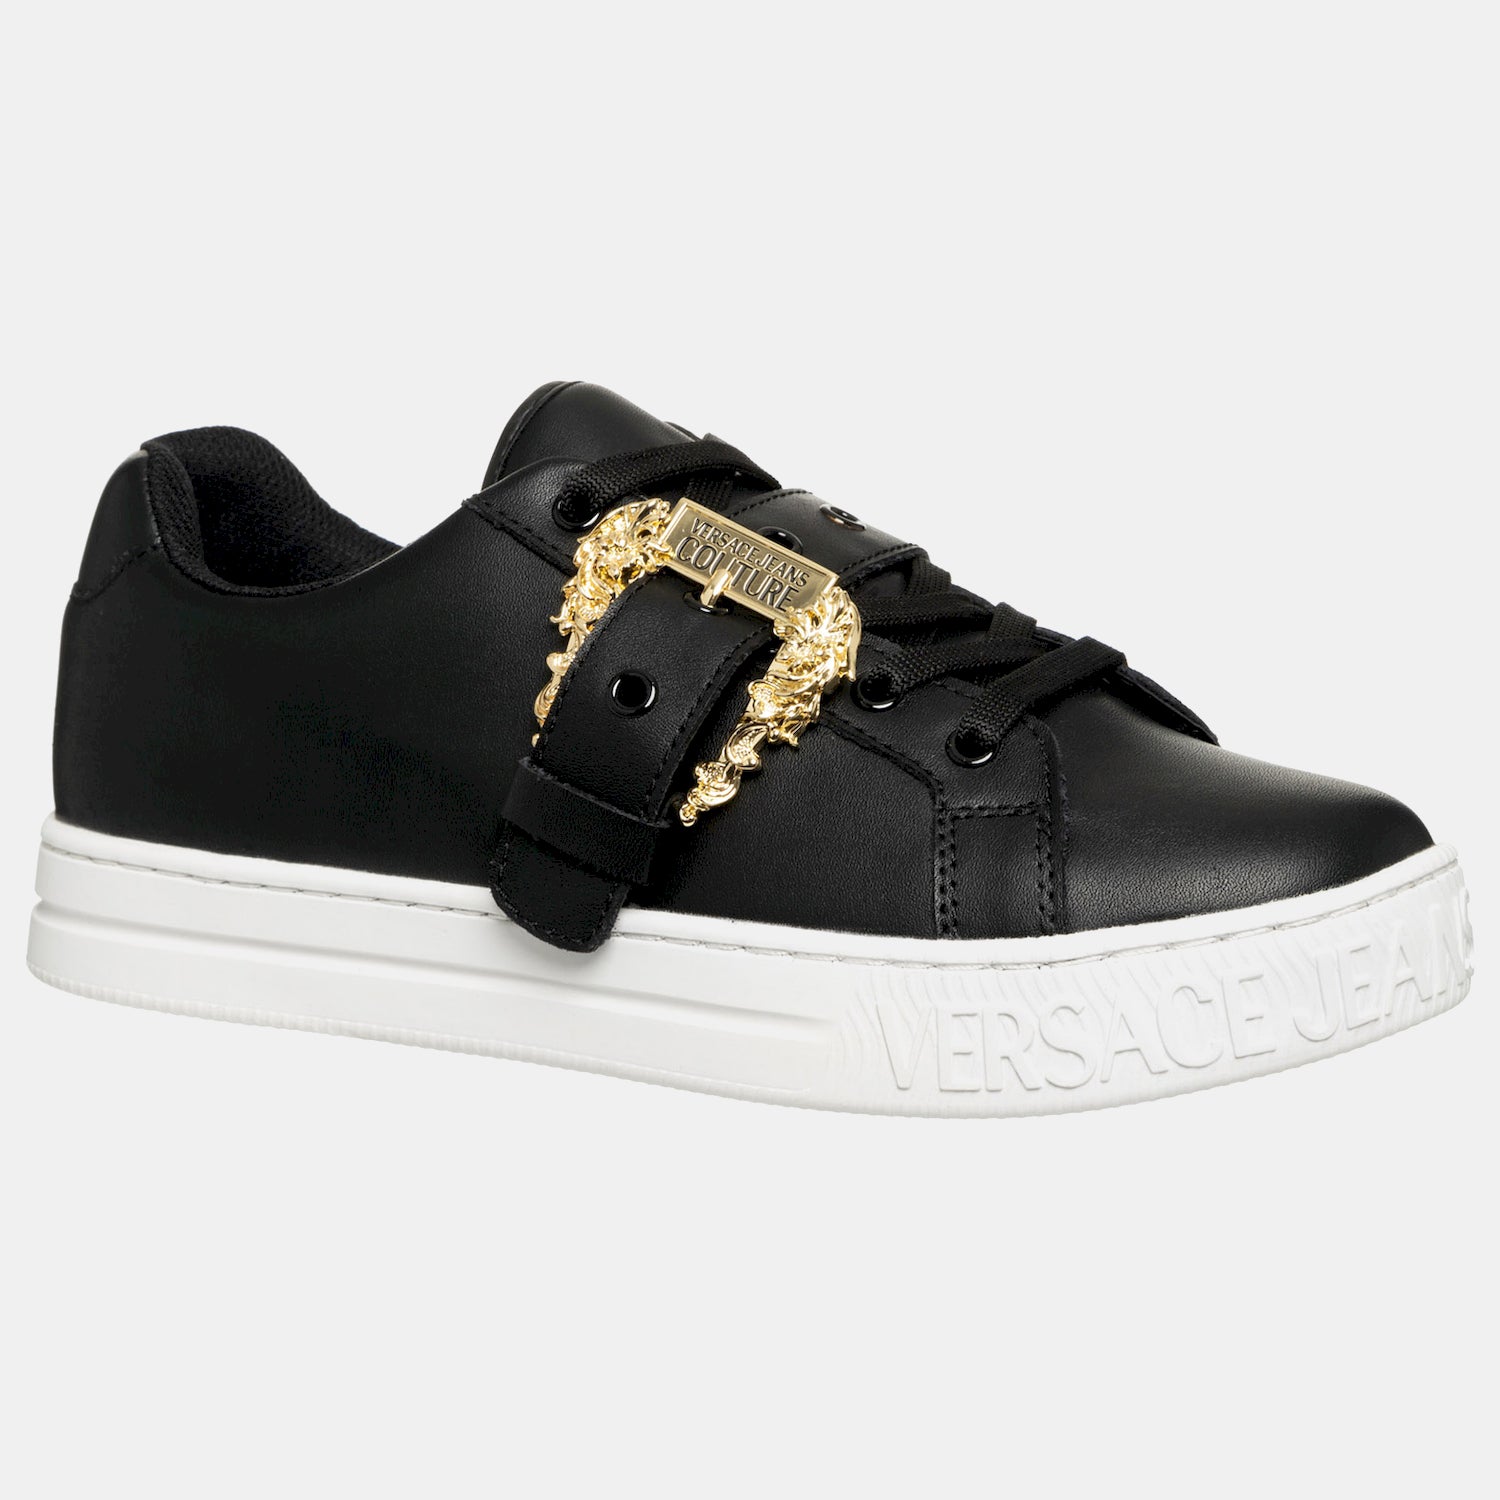 Versace Sapatilhas Sneakers Shoes 75va3sk9 Black Preto_shot4